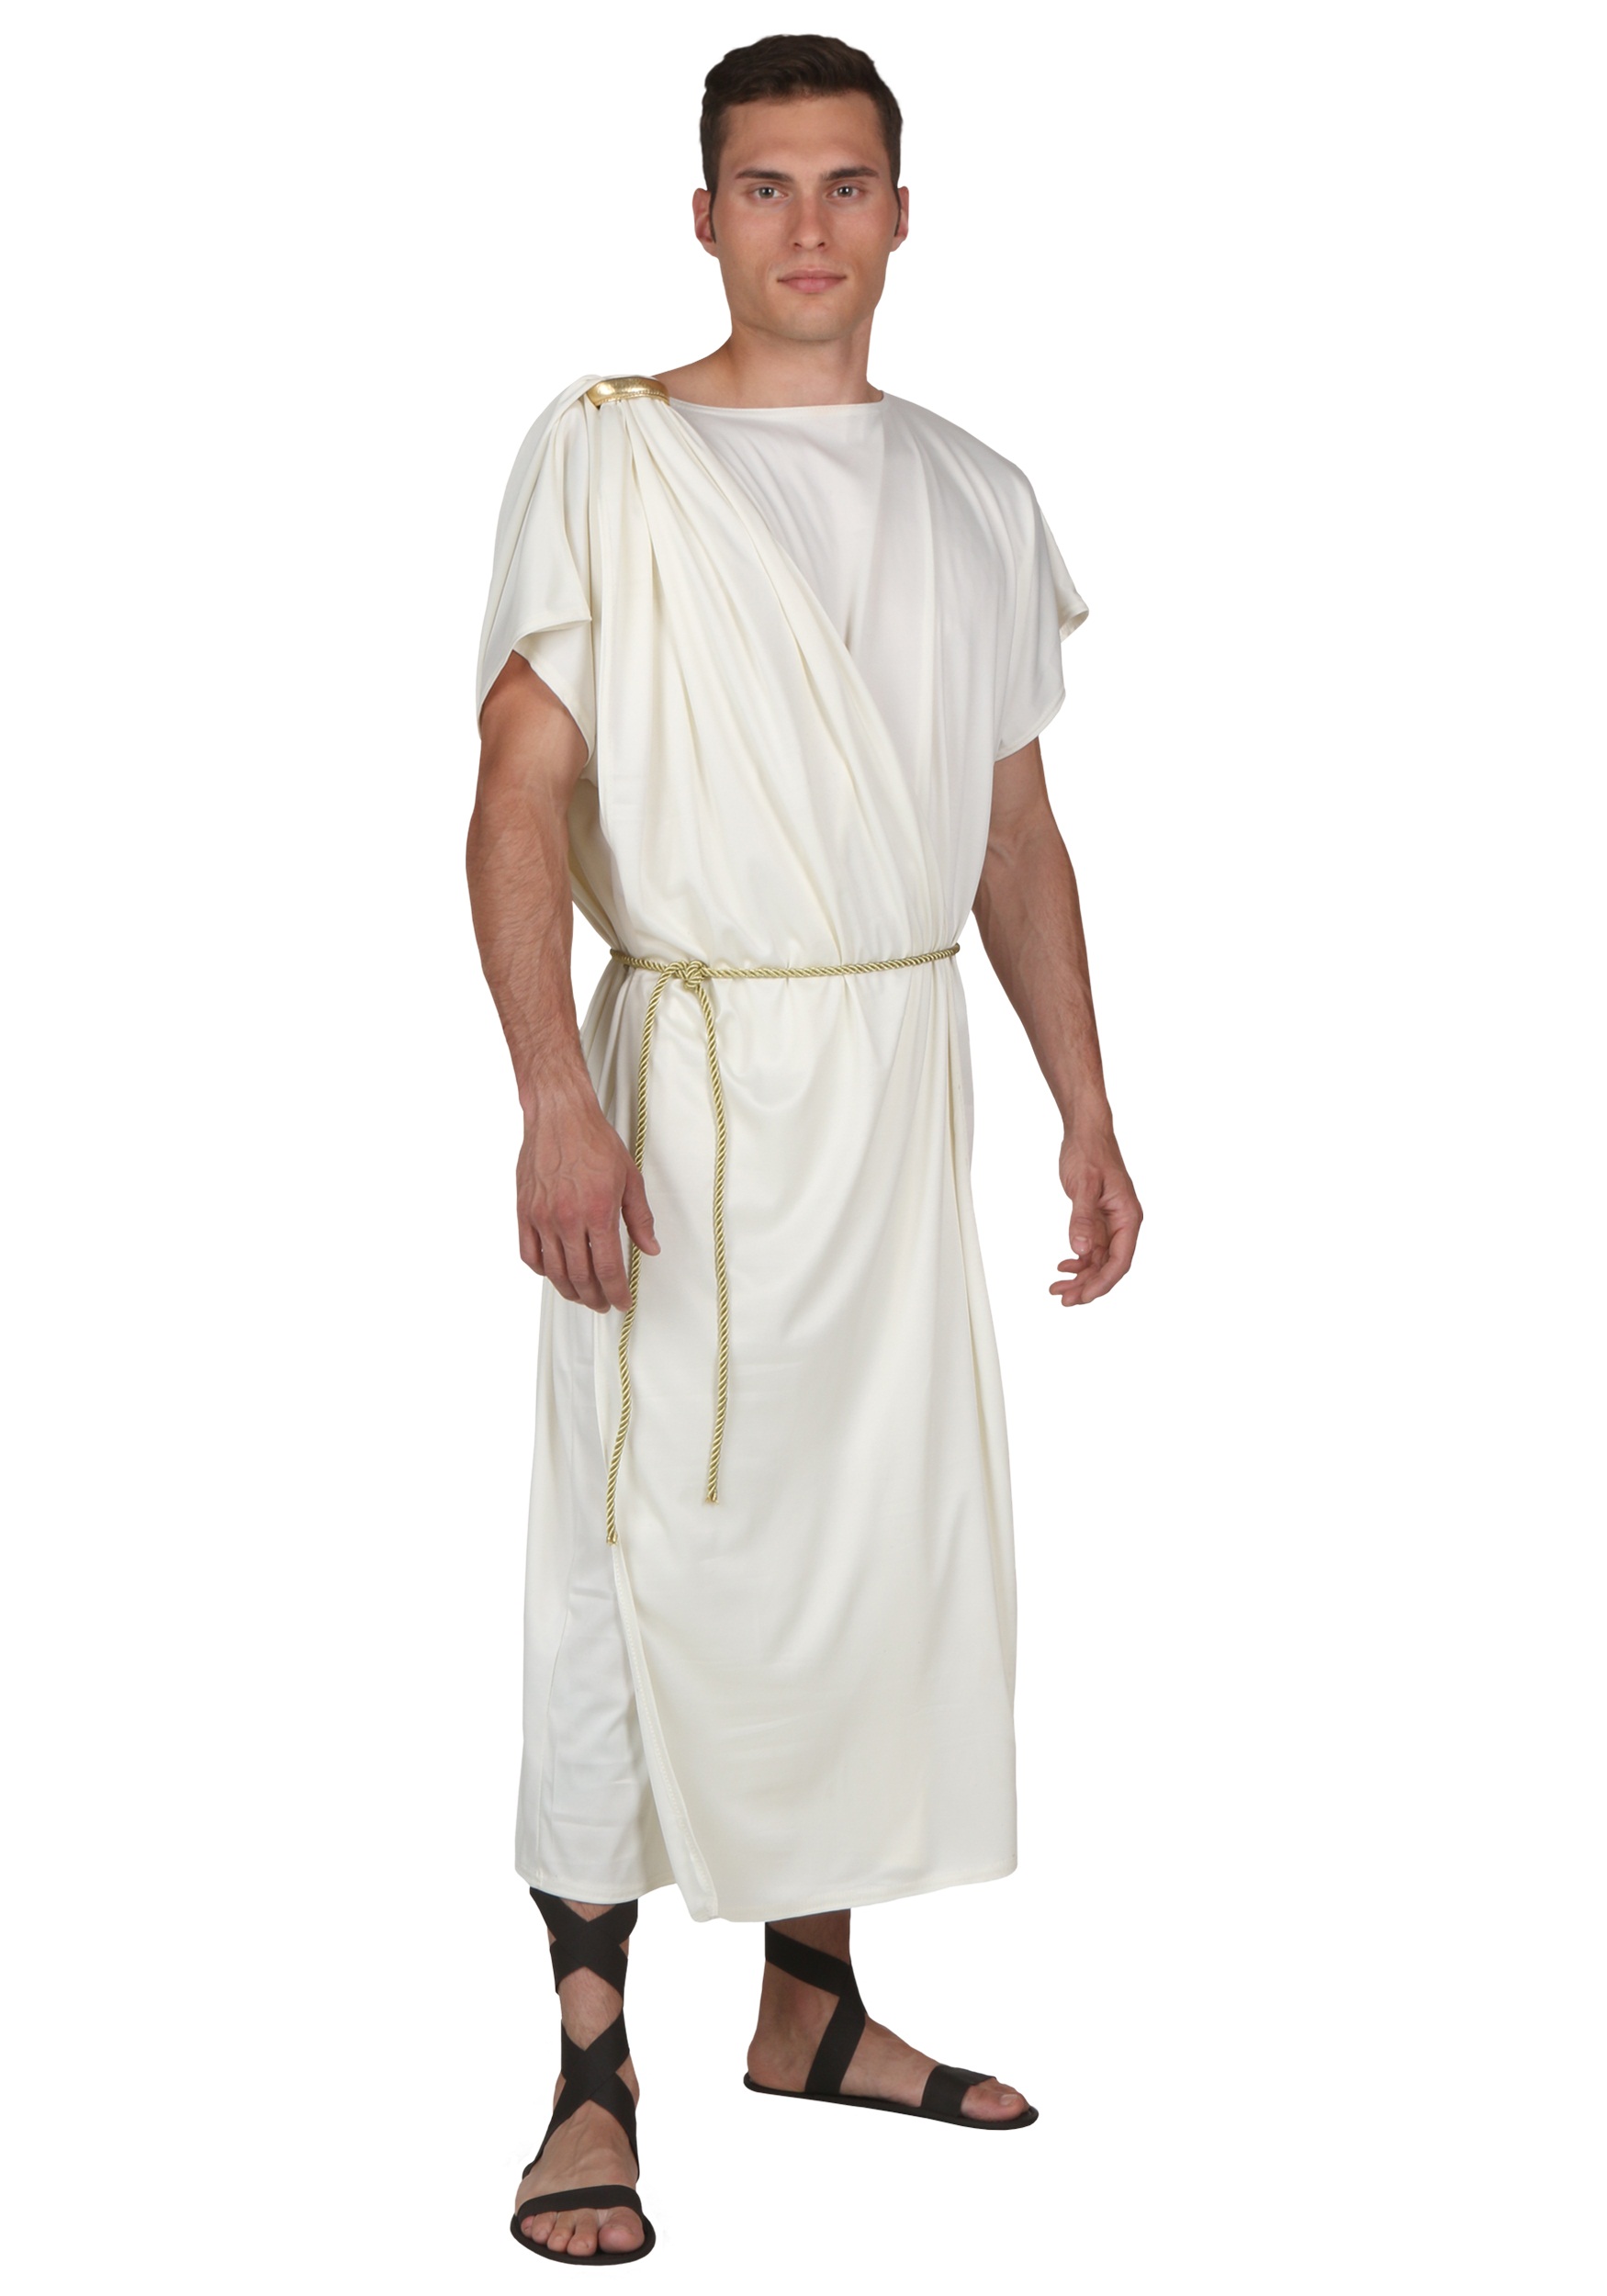 Roman Men’s Toga Costume